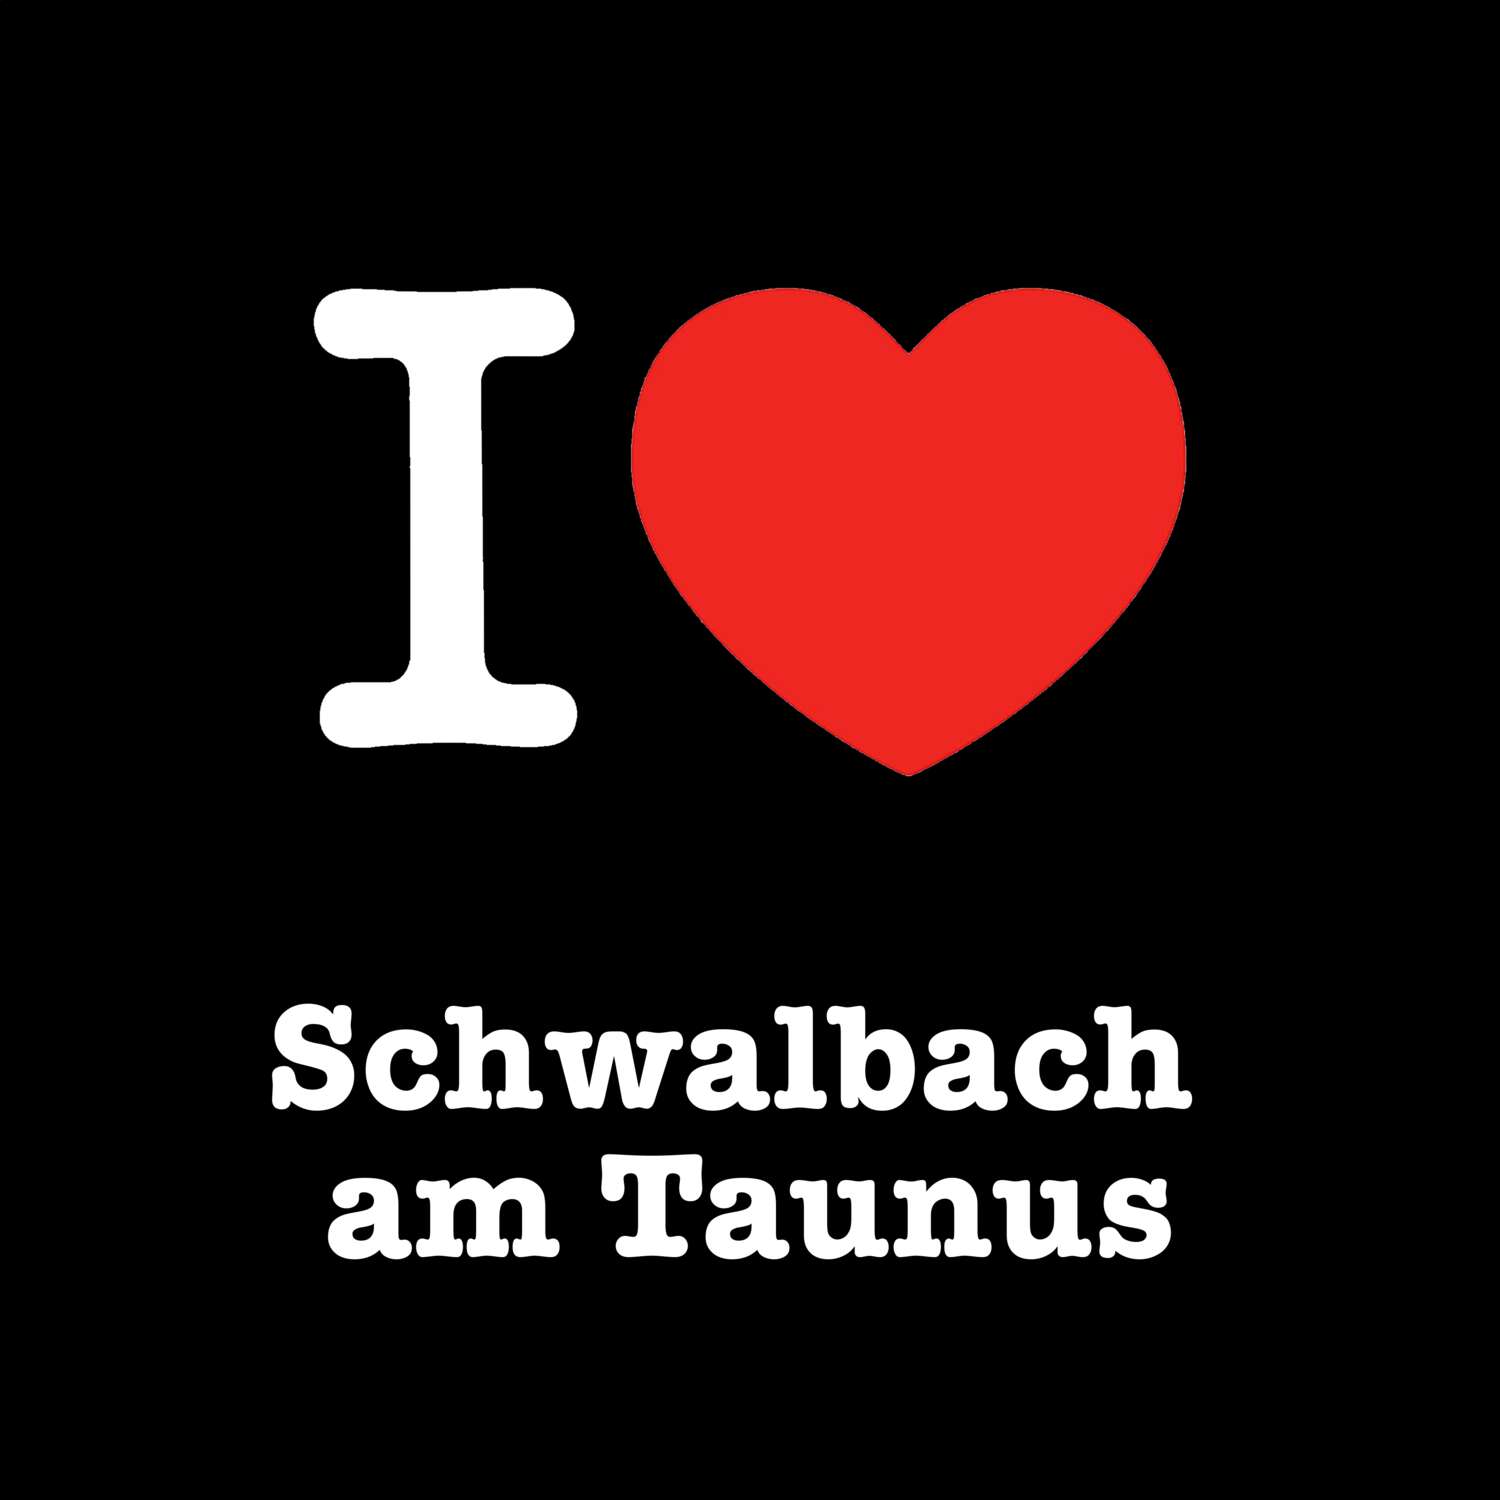 Schwalbach am Taunus T-Shirt »I love«